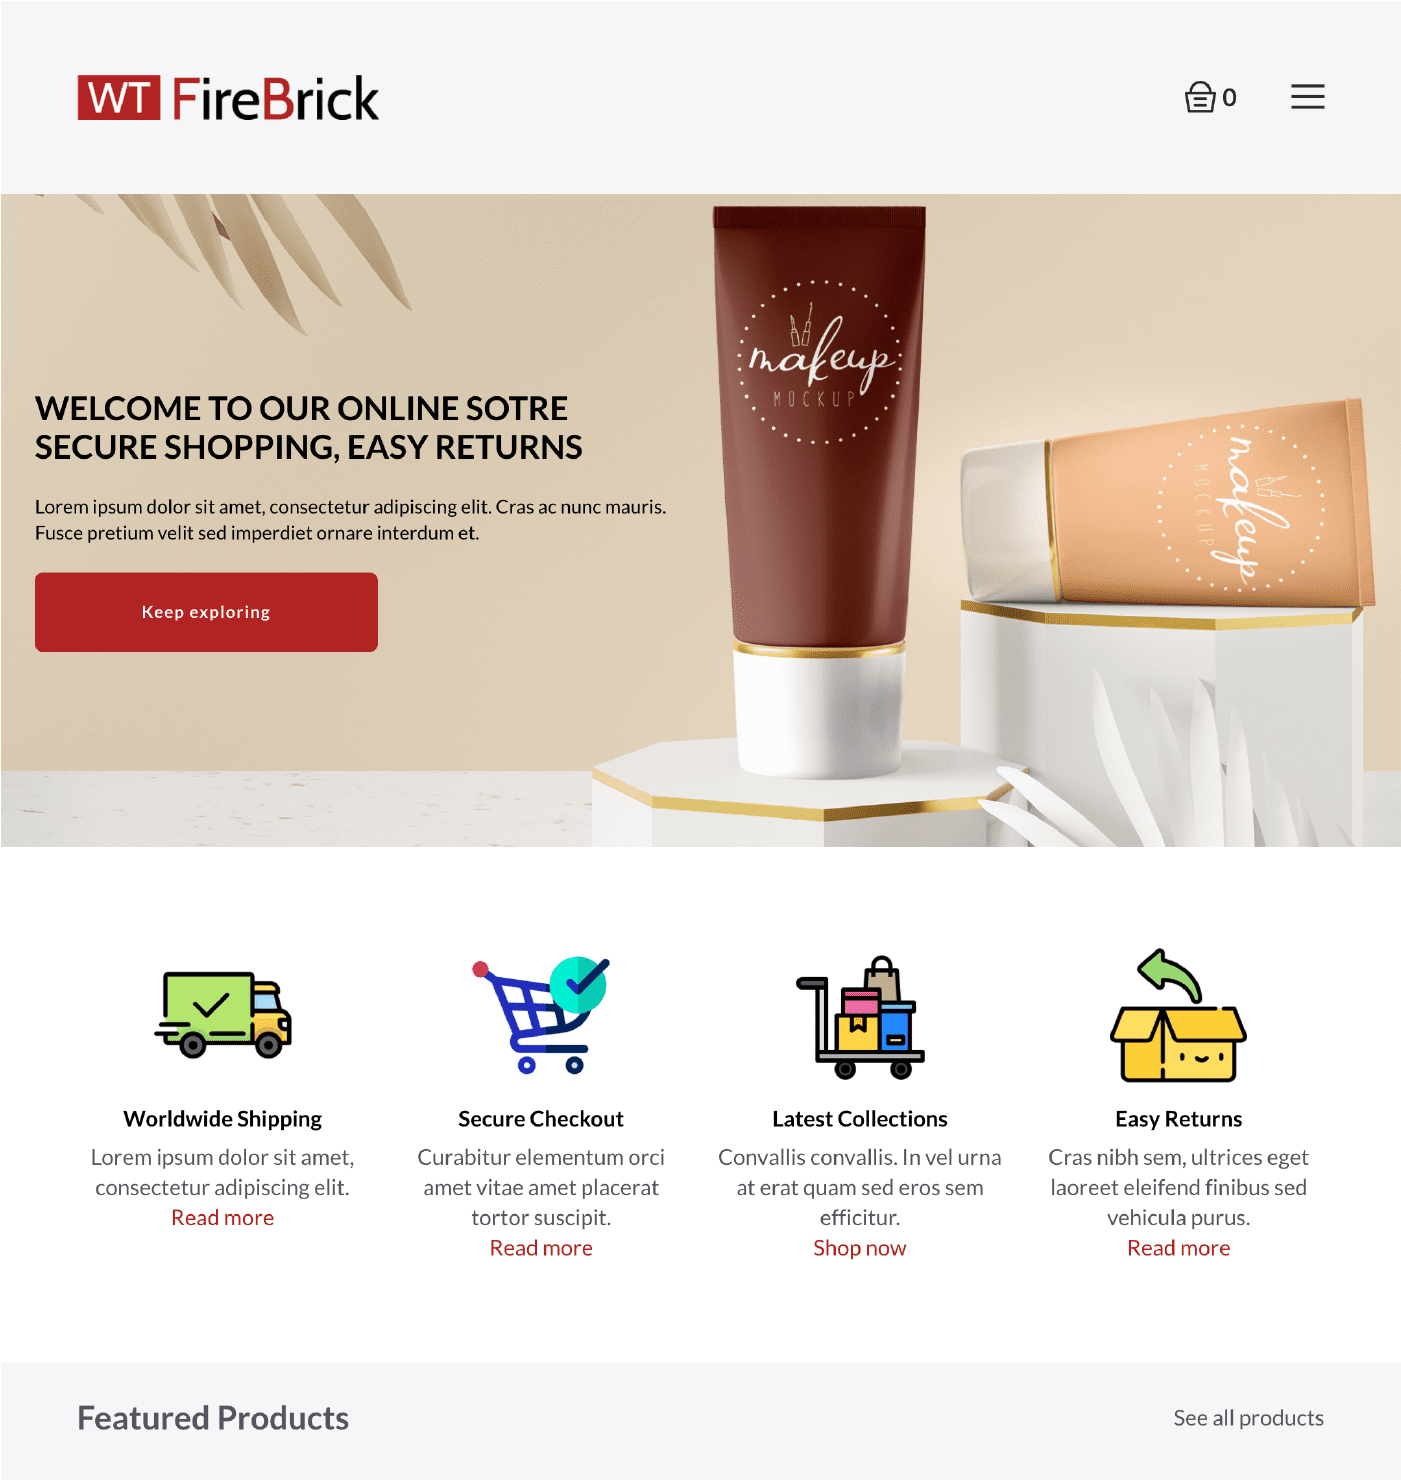 WT FireBrick - WordPress for WooCommerce Theme